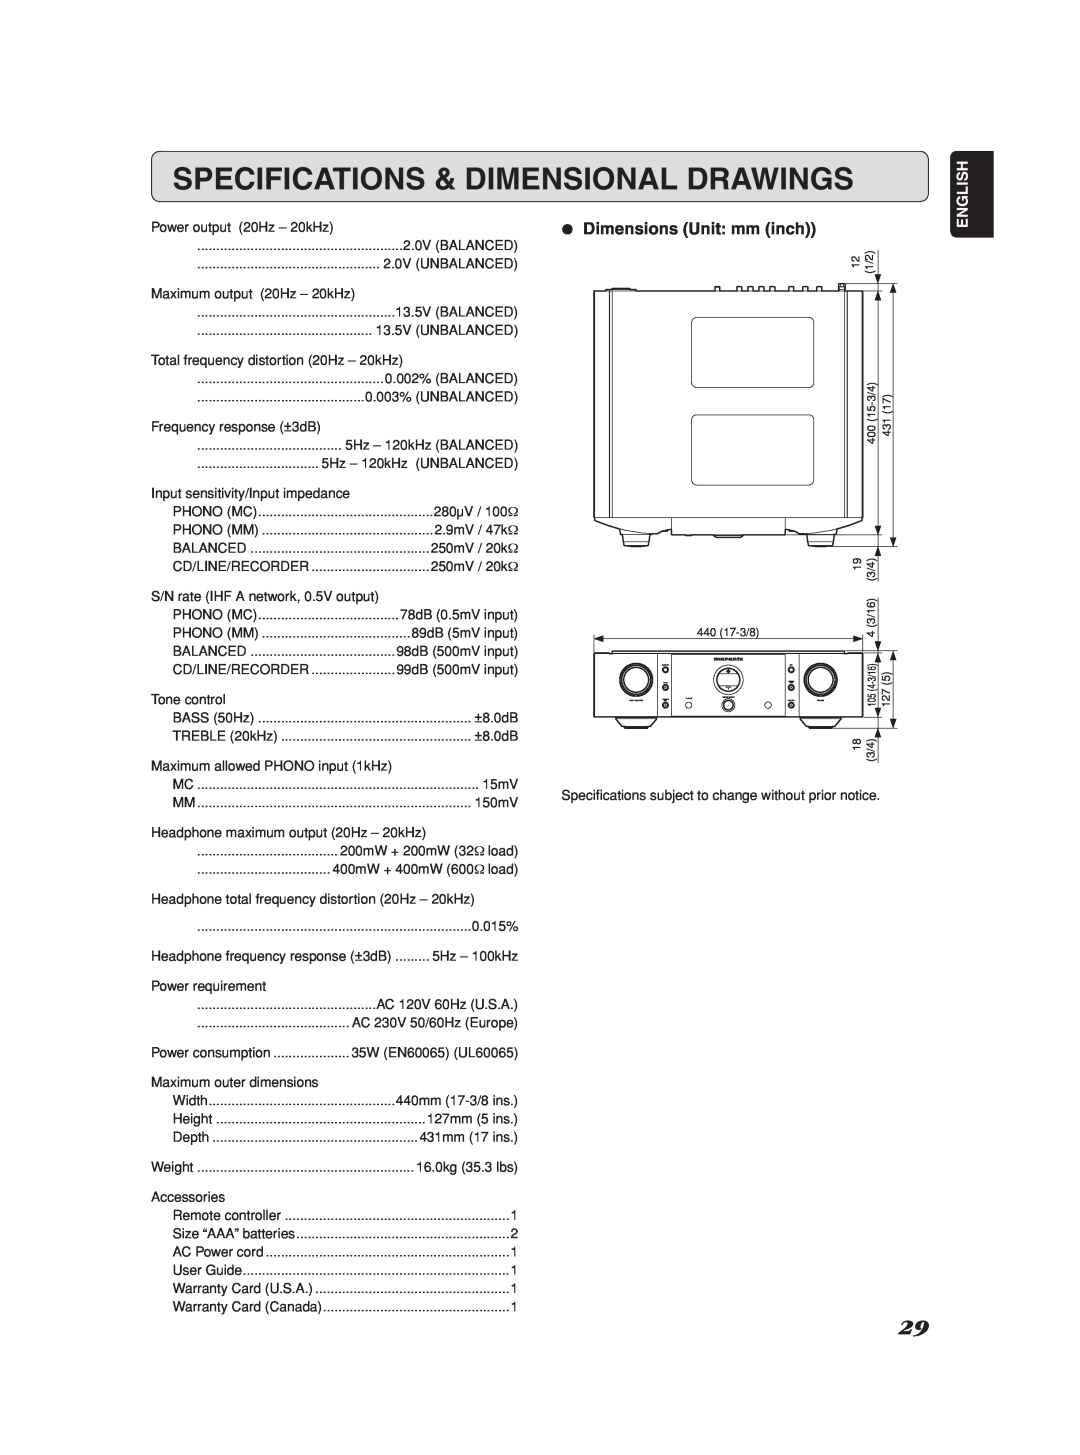 Marantz Model SC-11S1 manual Specifications & Dimensional Drawings, ¶ Dimensions Unit mm inch, English 